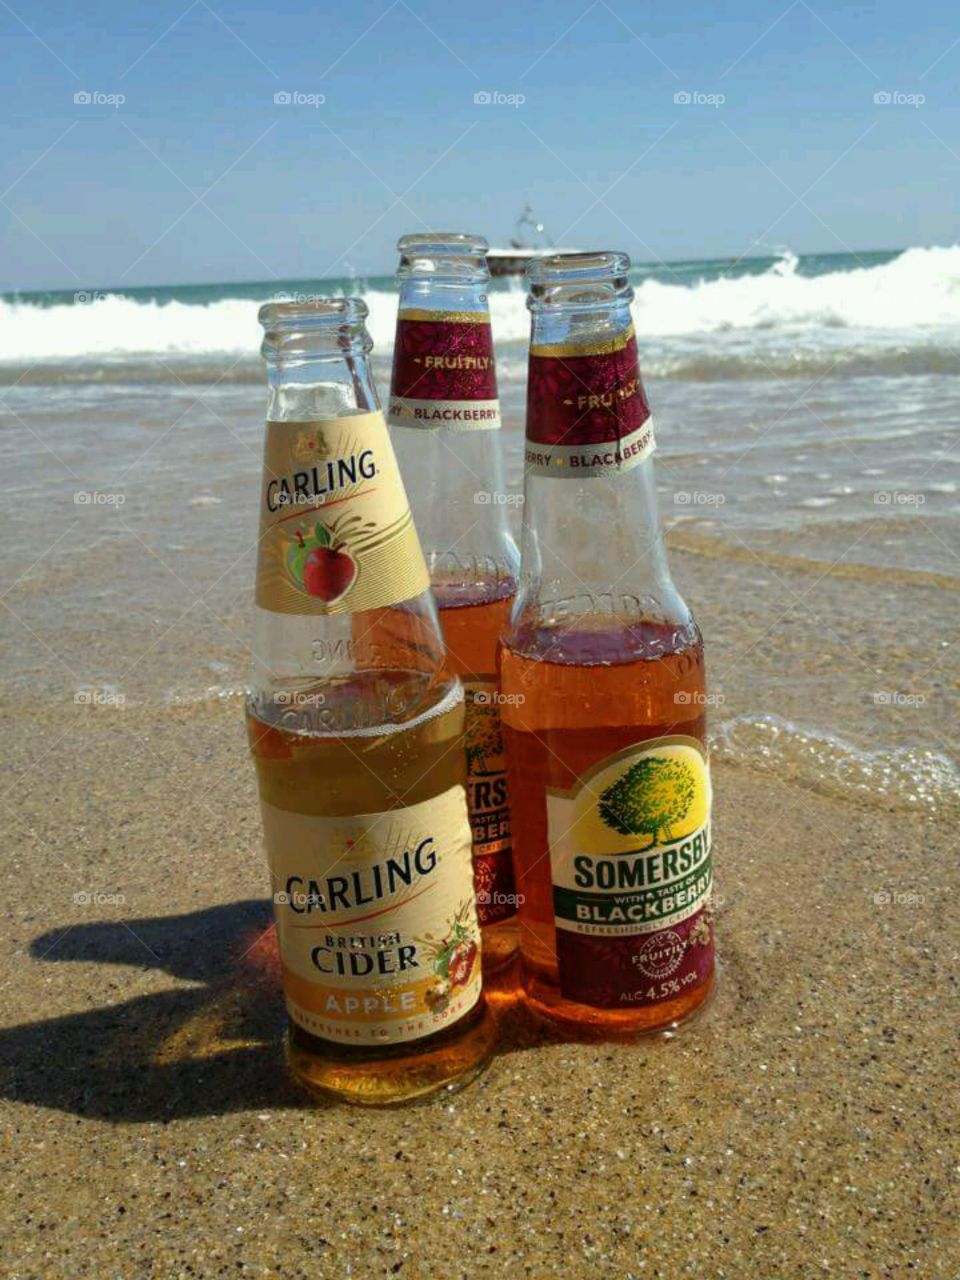 bottles on the beach. Black sea